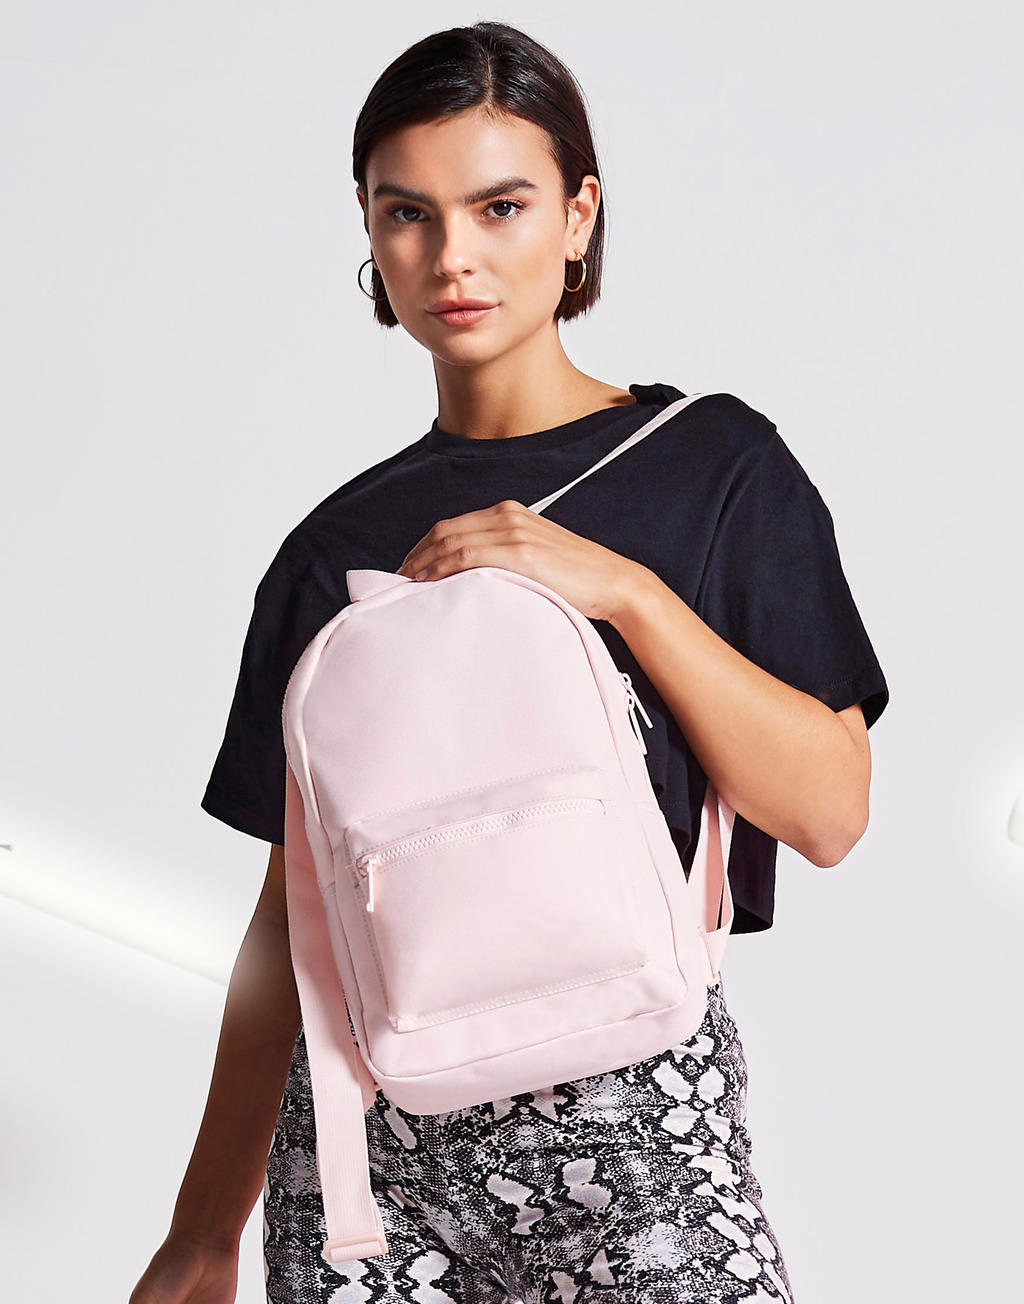  Mini Essential Fashion Backpack in Farbe White